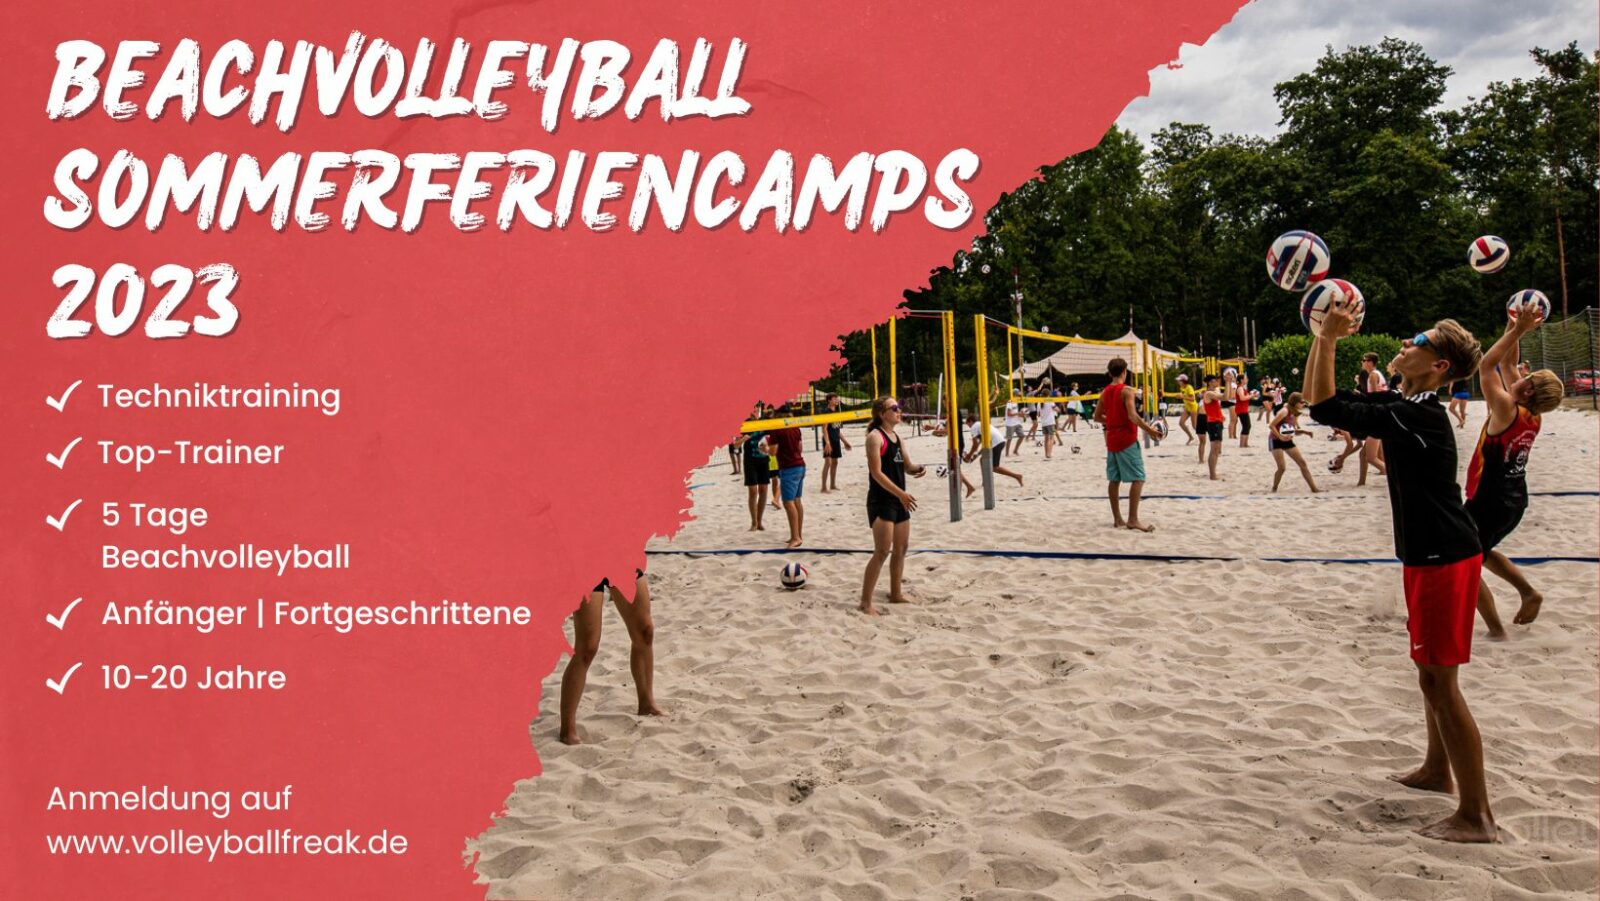 Beachvolleyball Sommerferiencamps 2023 in Köln